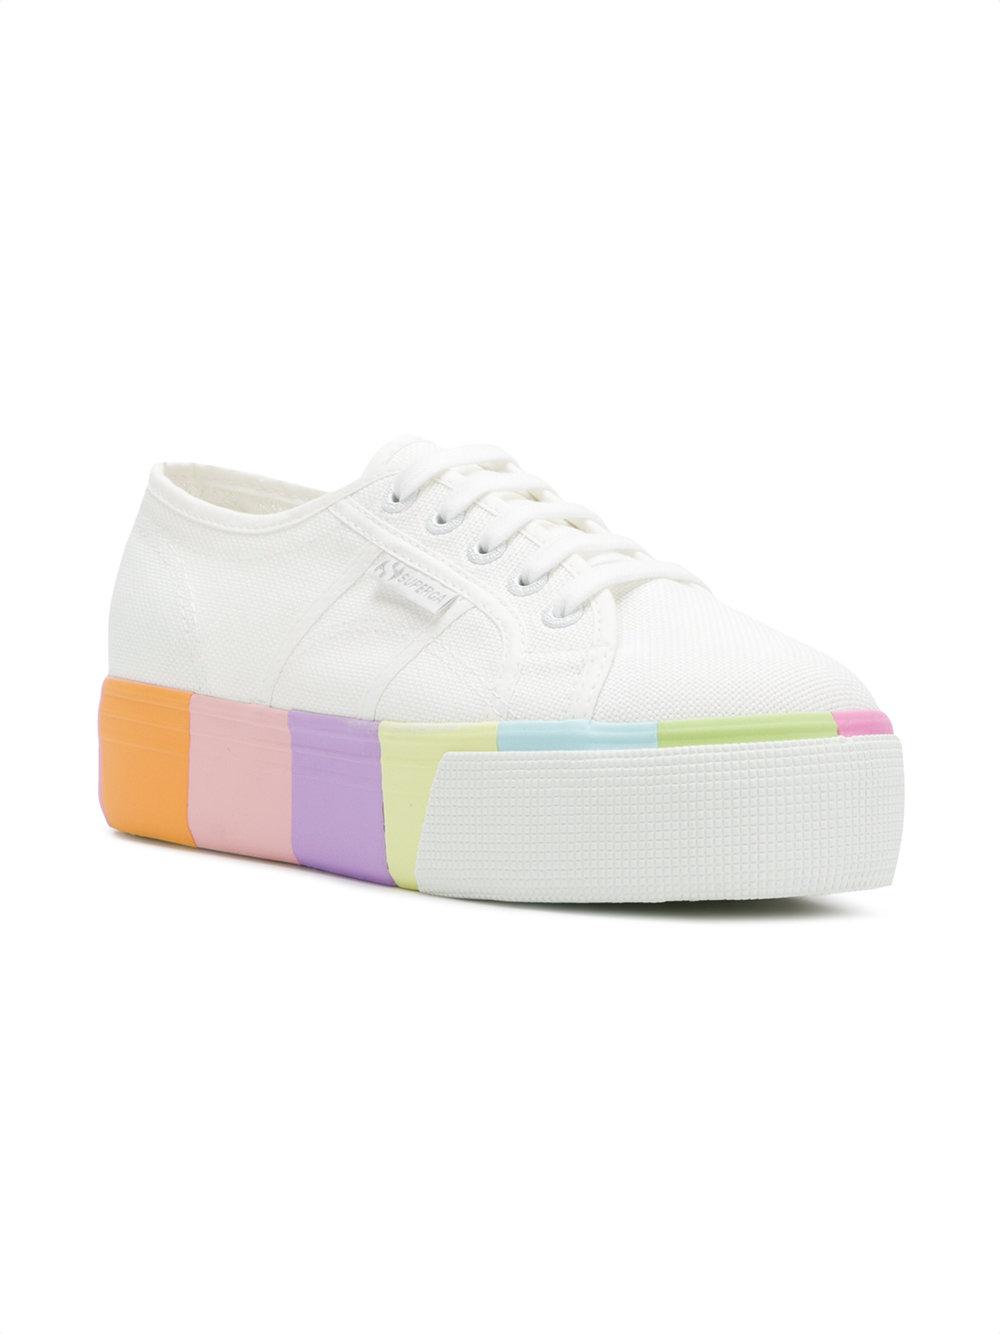 rainbow superga platform shoes